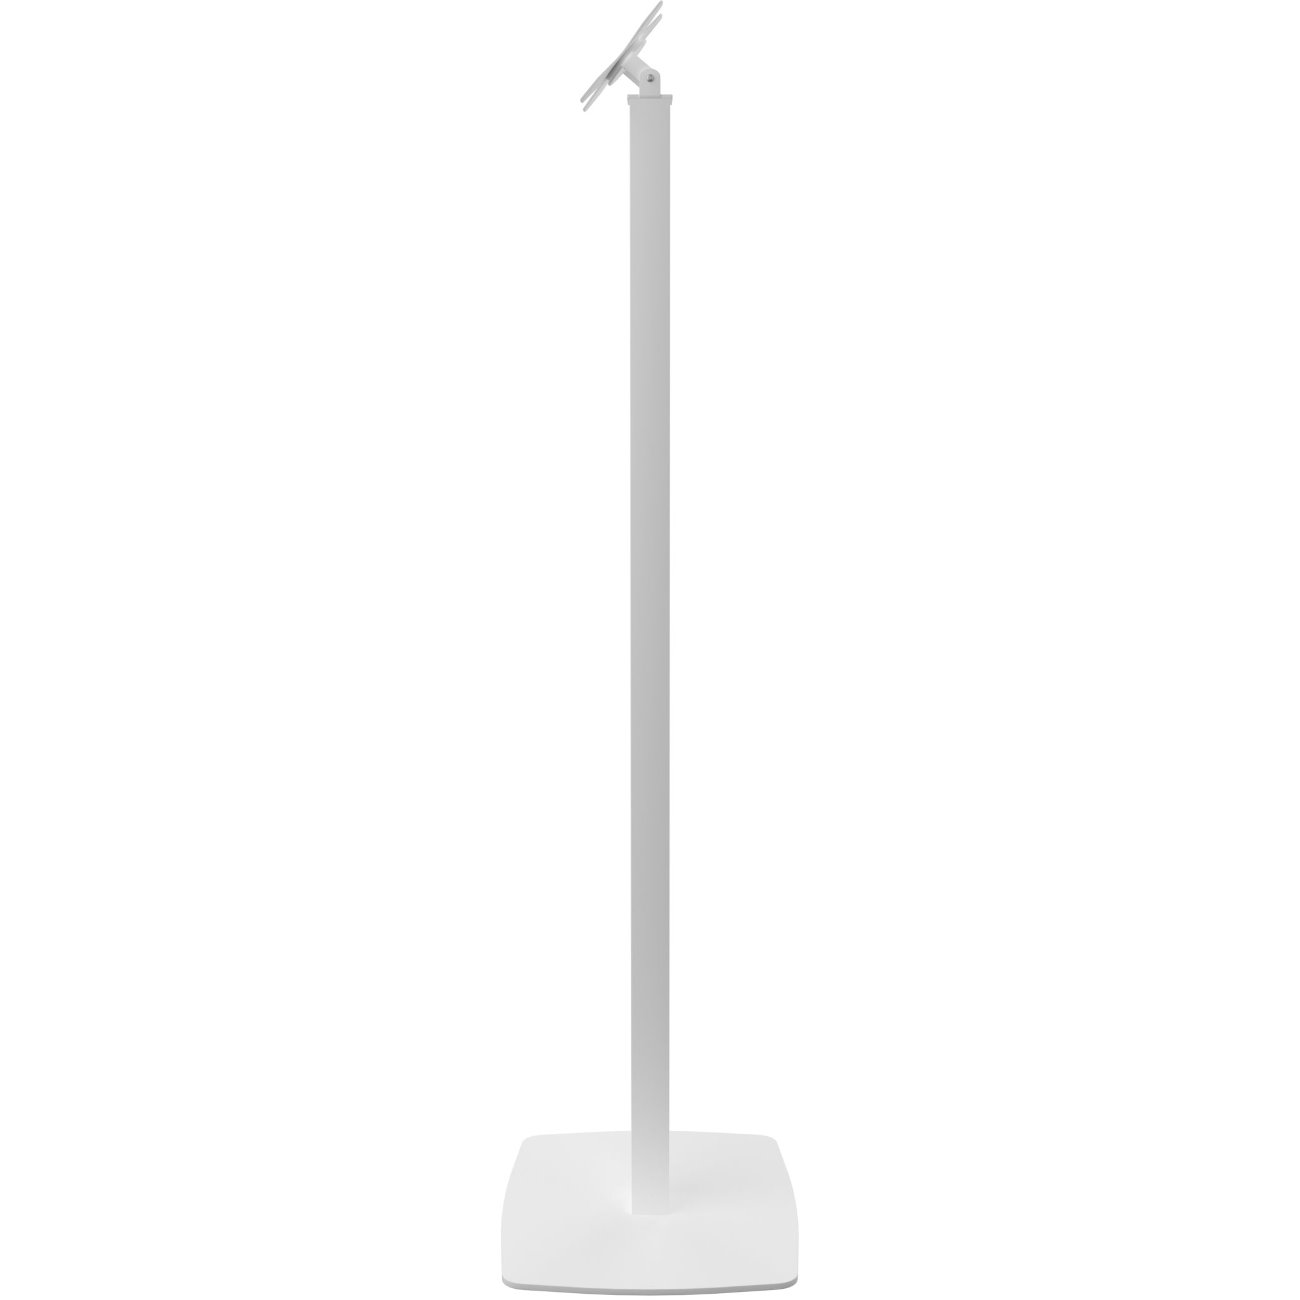 CTA Digital Premium Thin Profile Floor stand with VESA plate and Base (White)